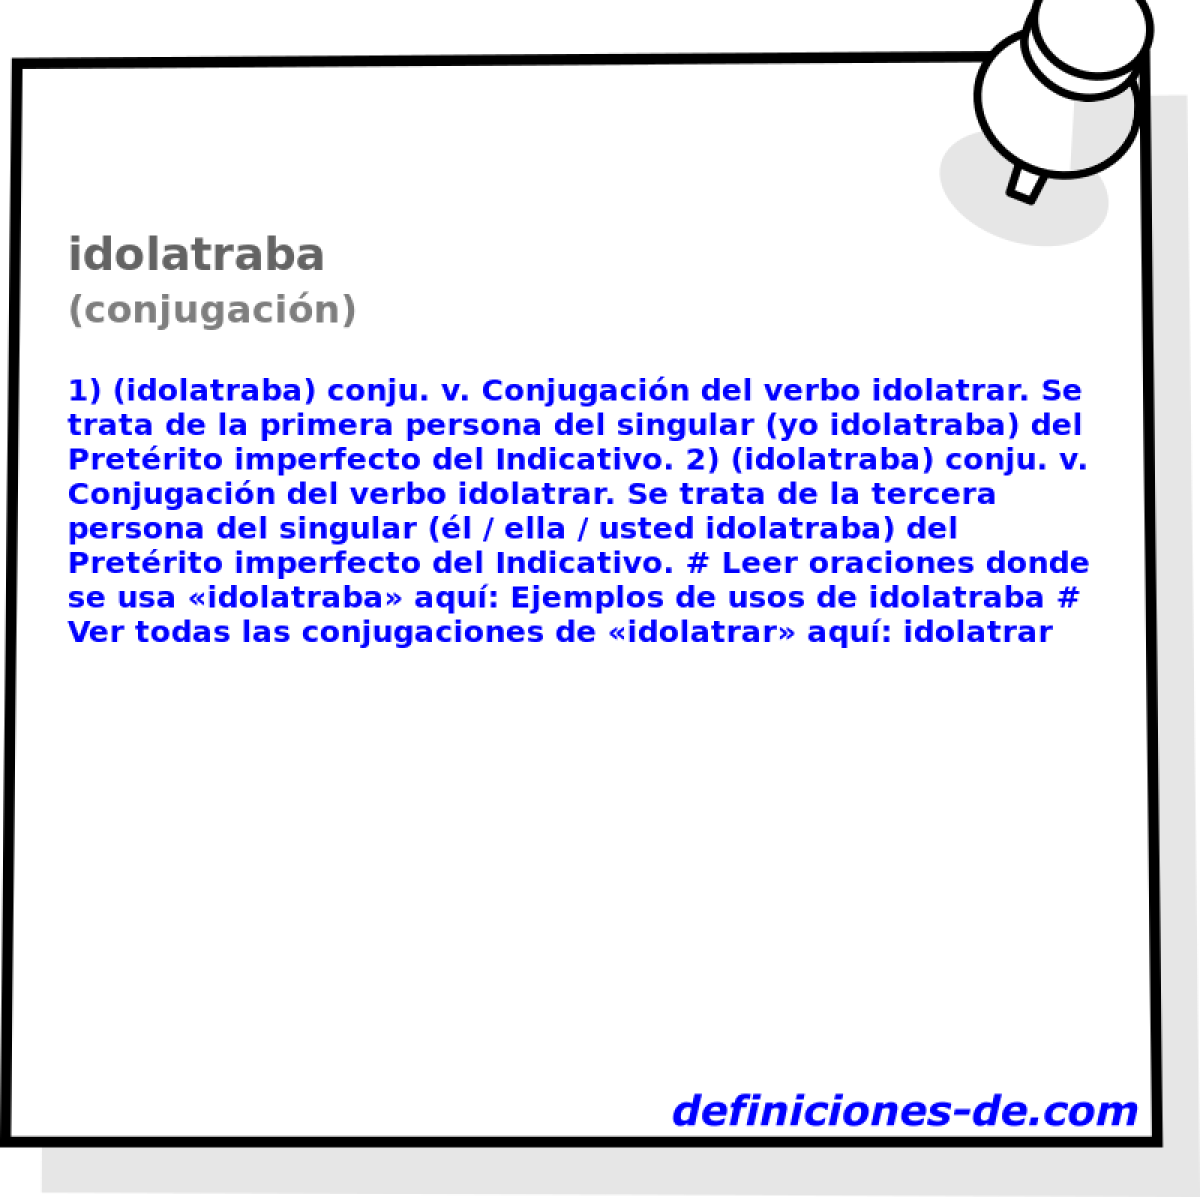 idolatraba (conjugacin)